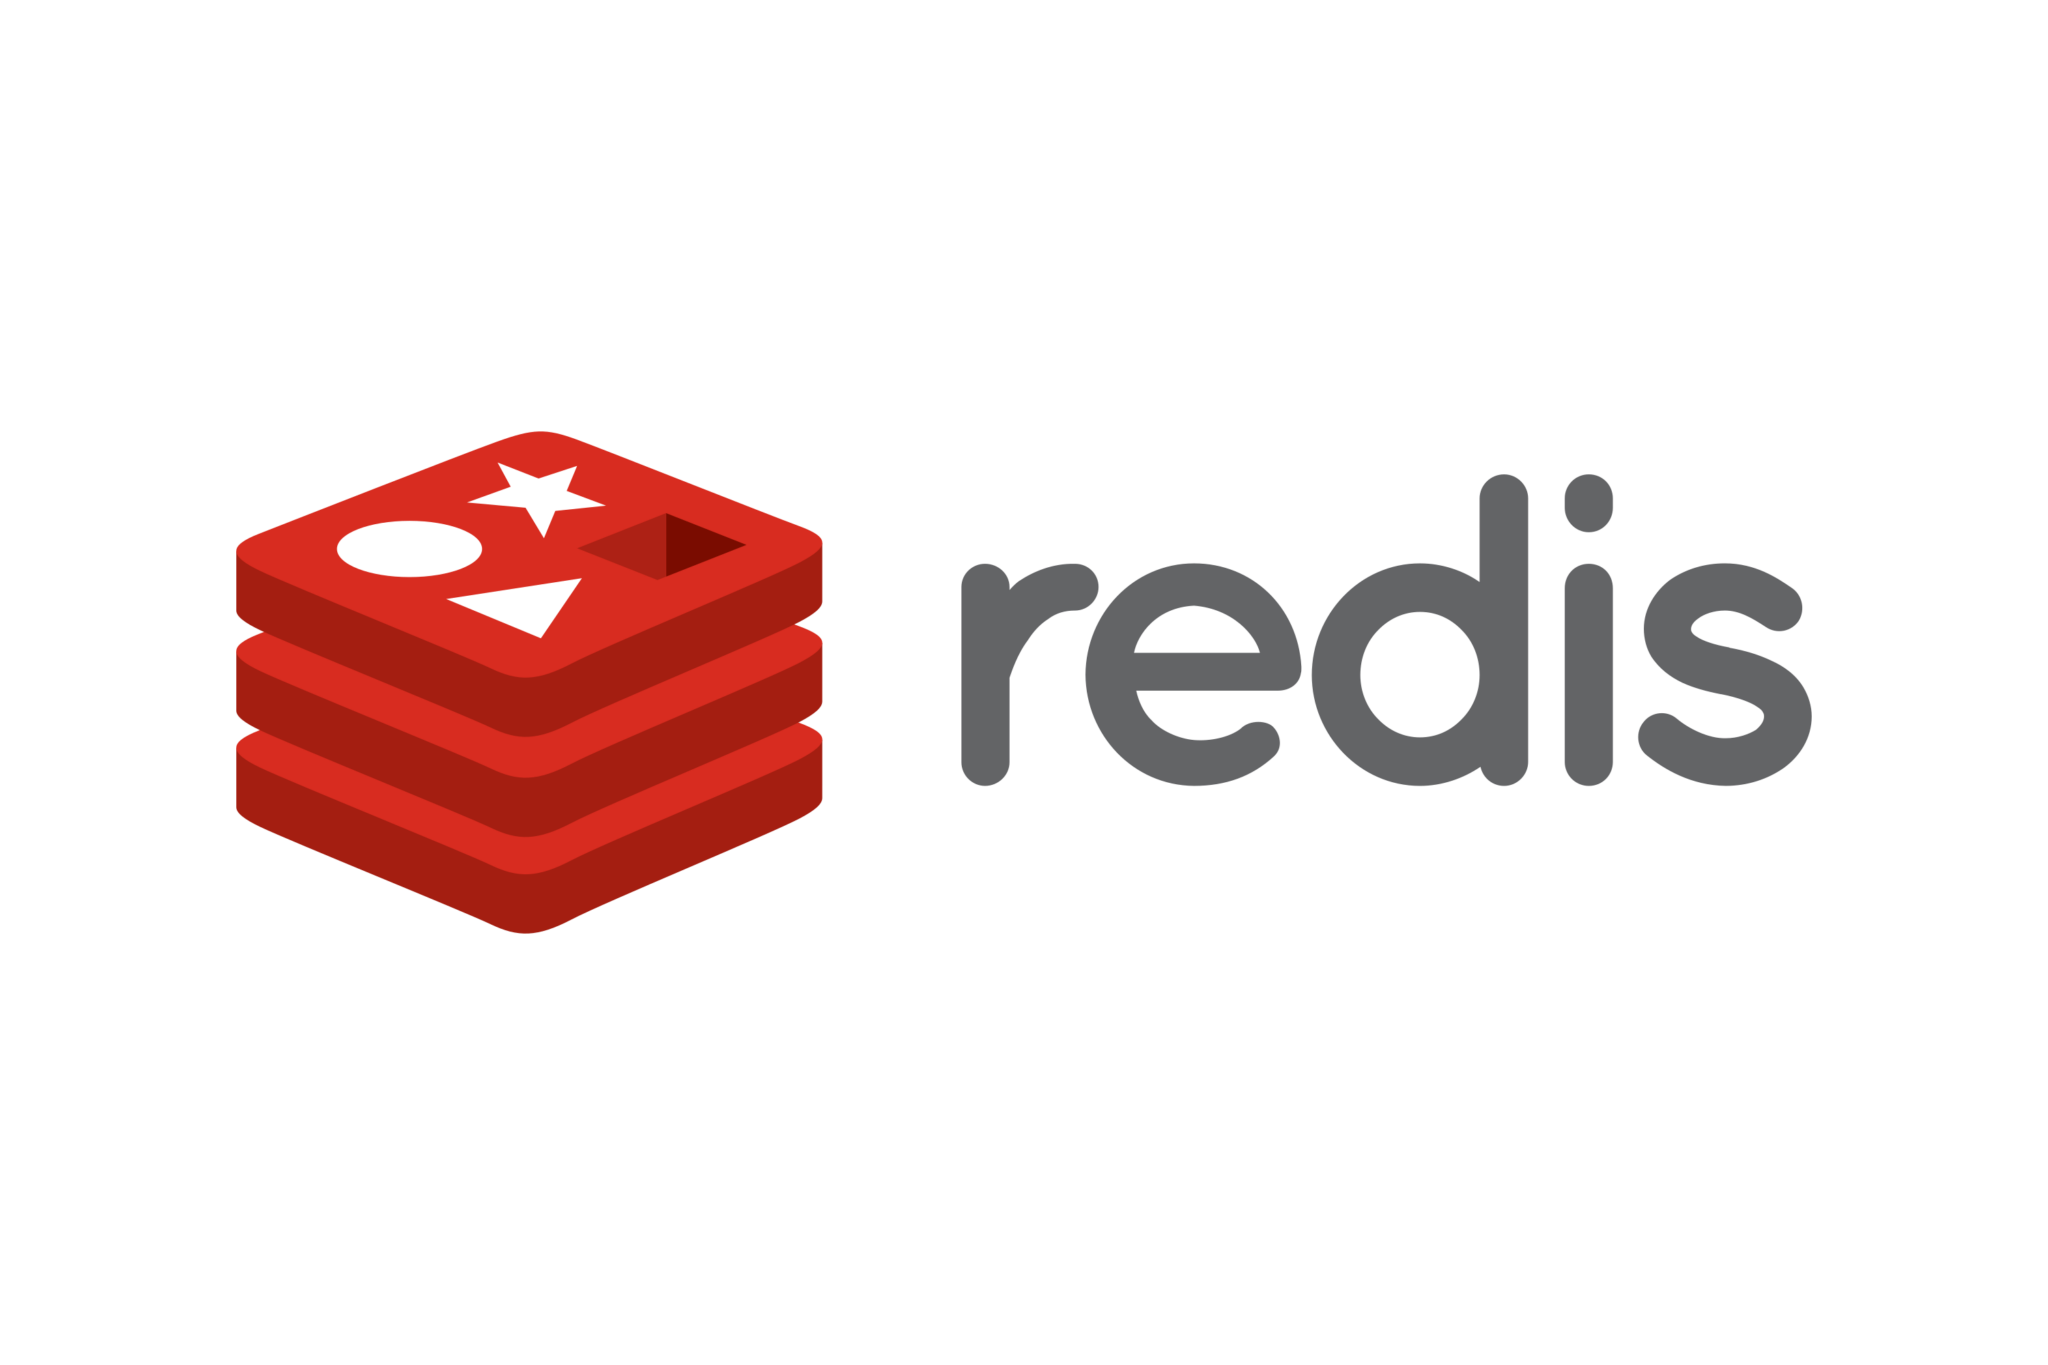 Redis логотип горизонтальный. Redis логотип вертикальный. Doktor Redis logo.